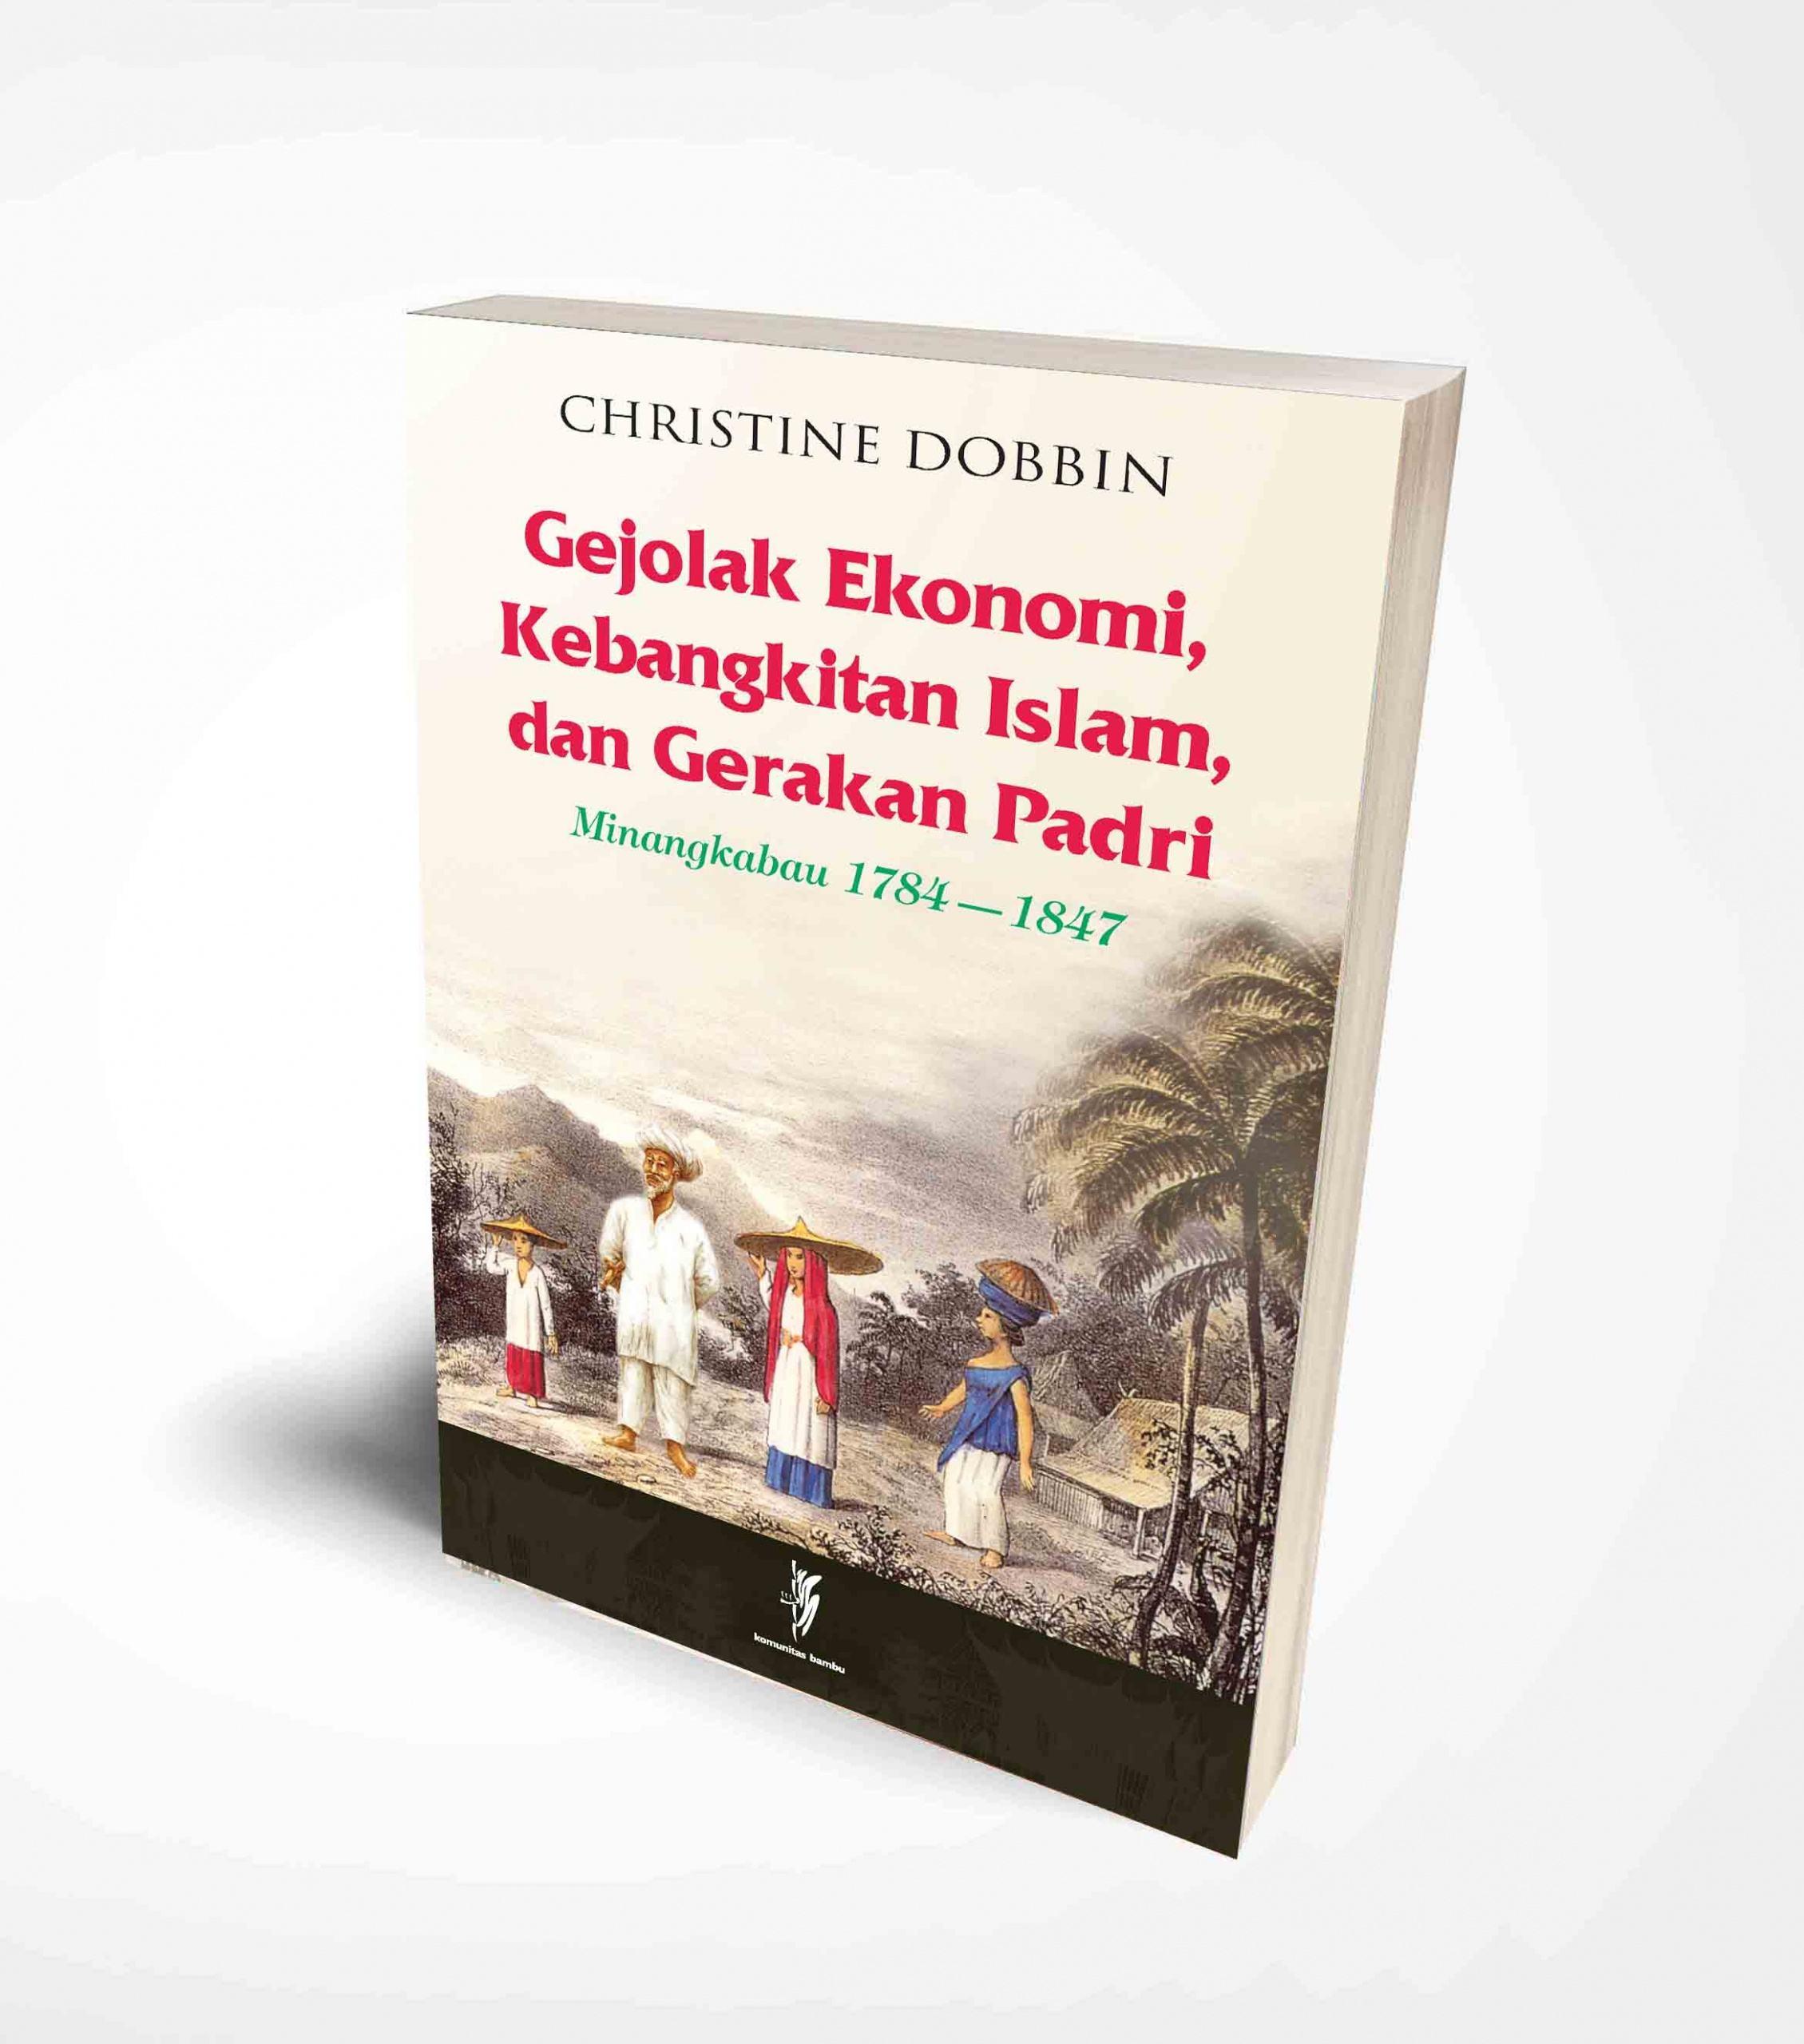 Gejolak Ekonomi, Kebangkitan Islam dan Gerakan Padri: Minangkabau 1784-1847